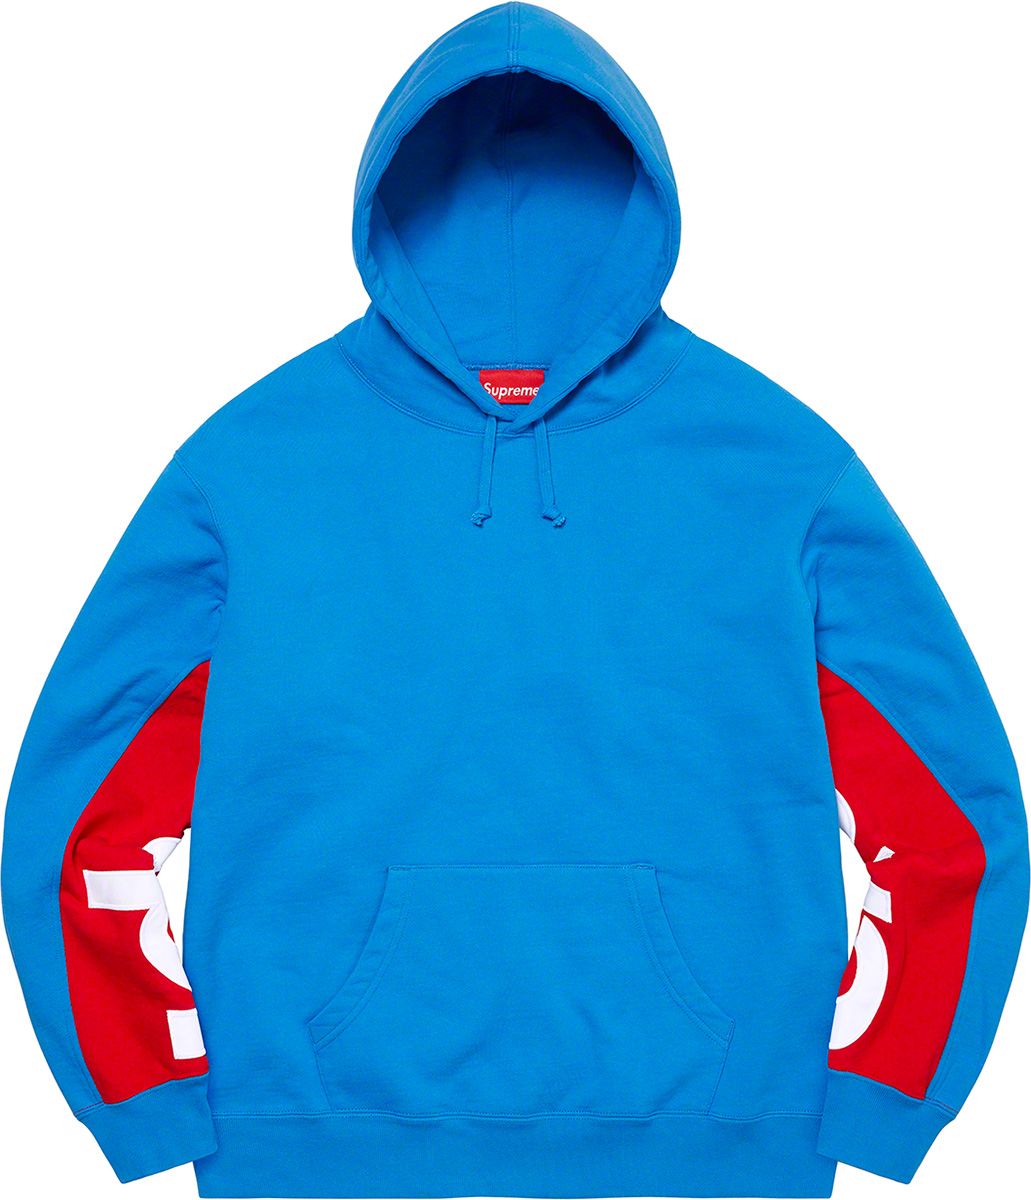 Reverse Patchwork Zip Up Hooded Sweatshirt - Spring/Summer 2022